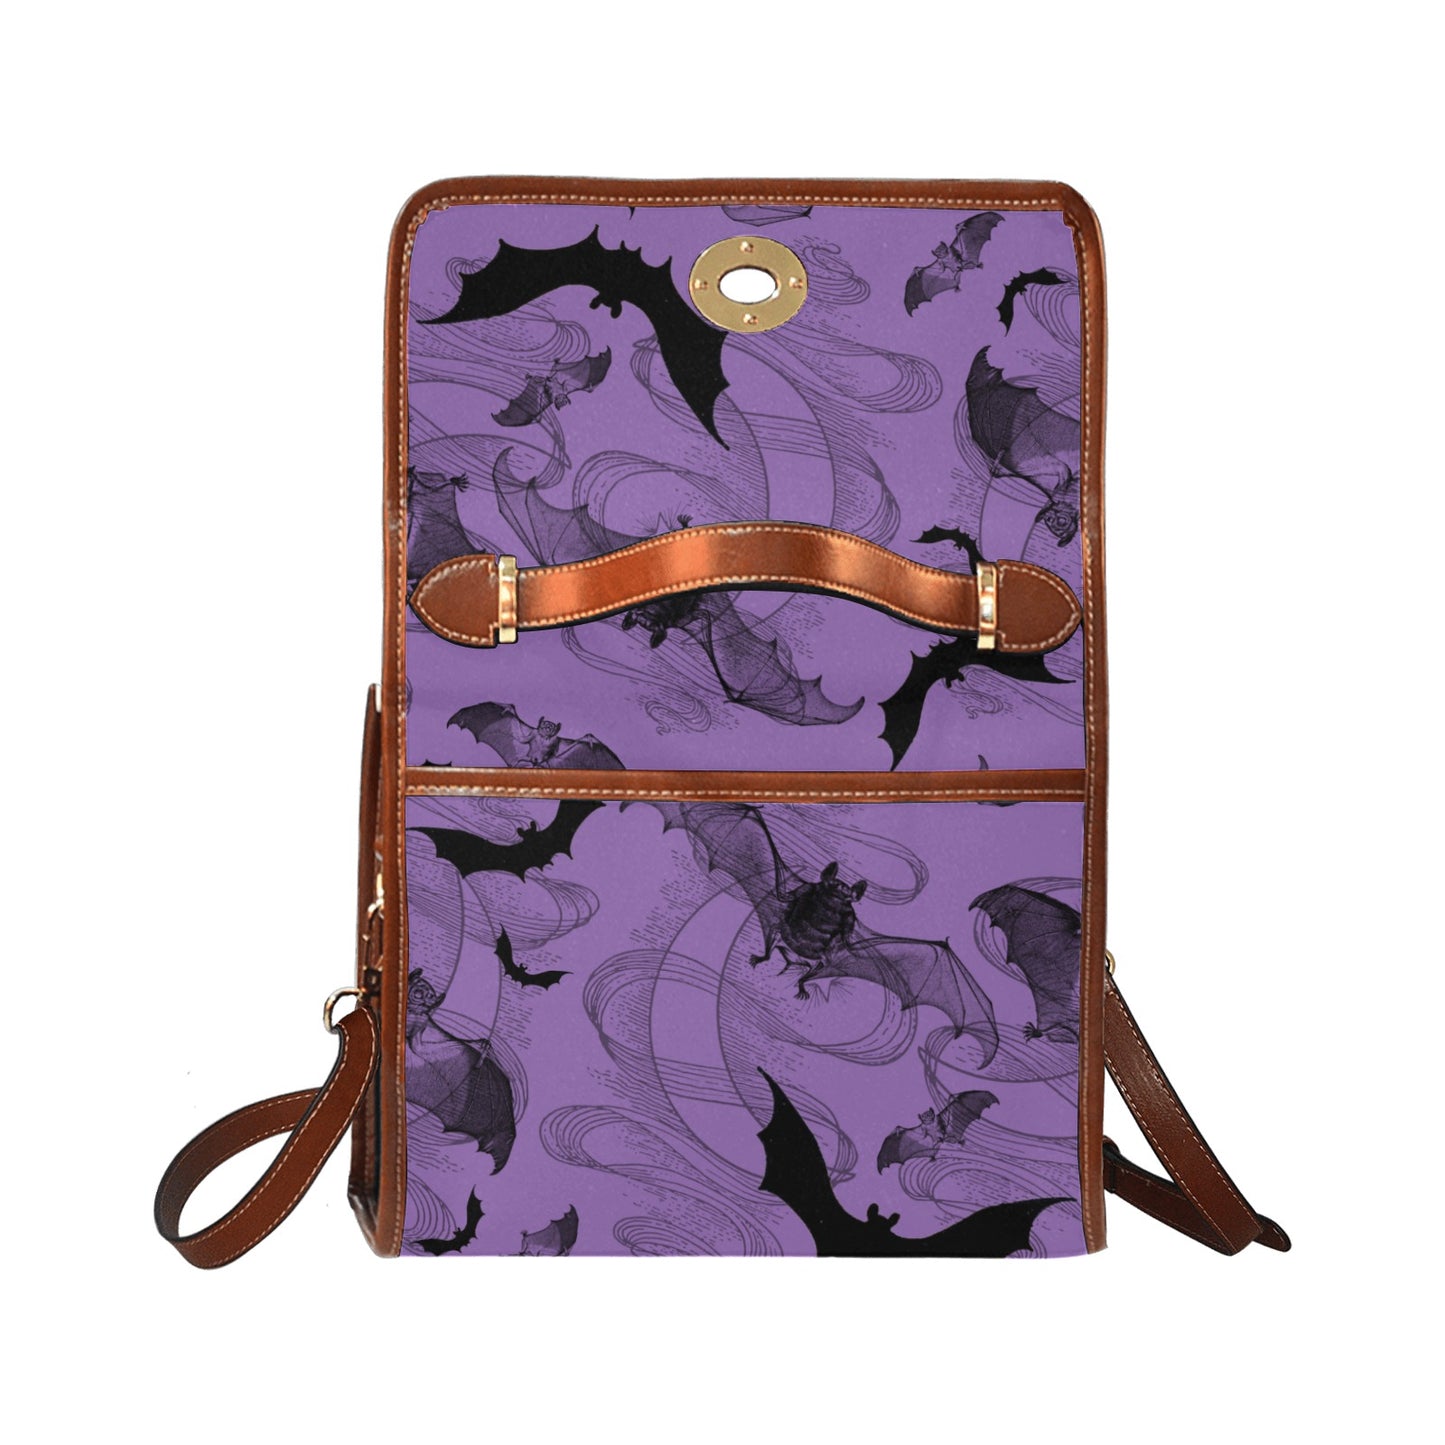 Smokey Bats Waterproof Canvas Bag